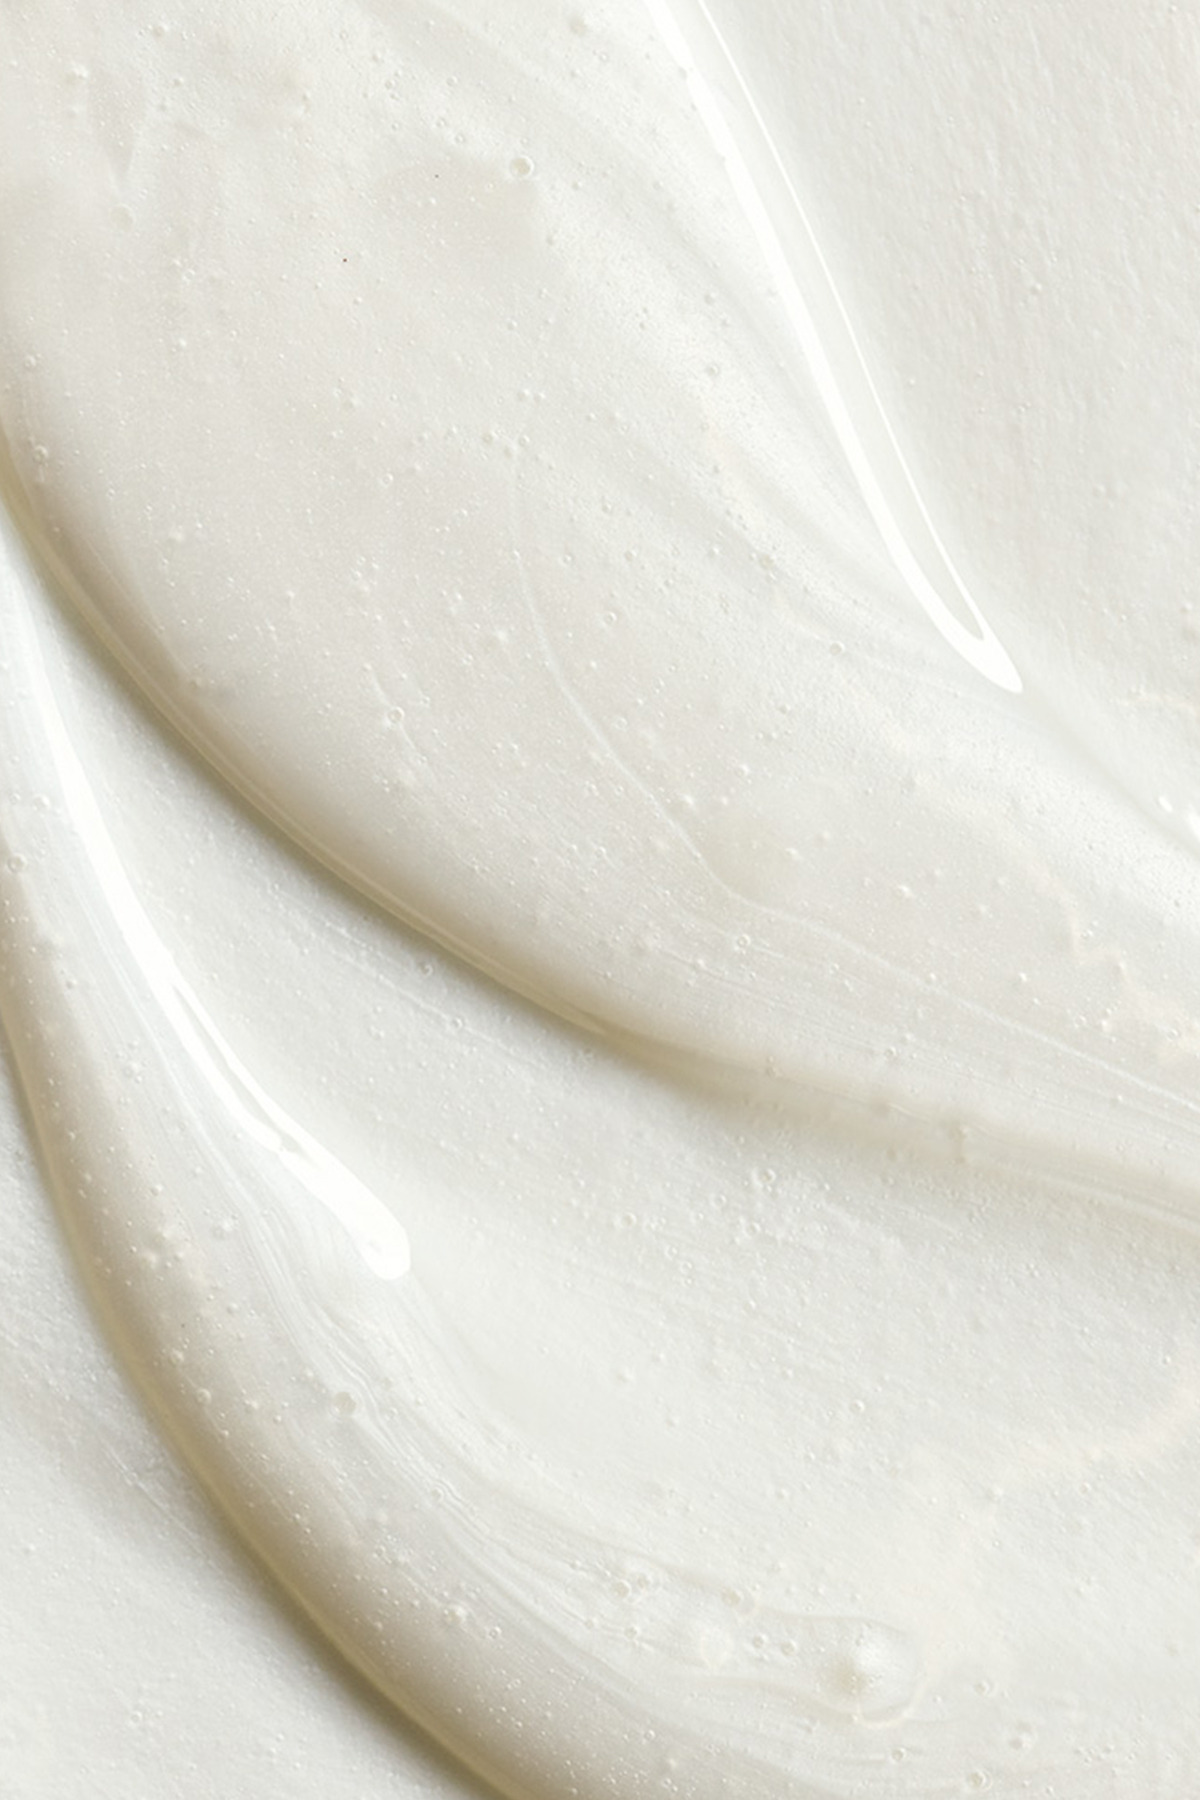 Yves Rocher شامپو تغذیه کننده آسان شانه برای موهای معمولی و خشک وگان بدون سولفات و نمک 300 میل